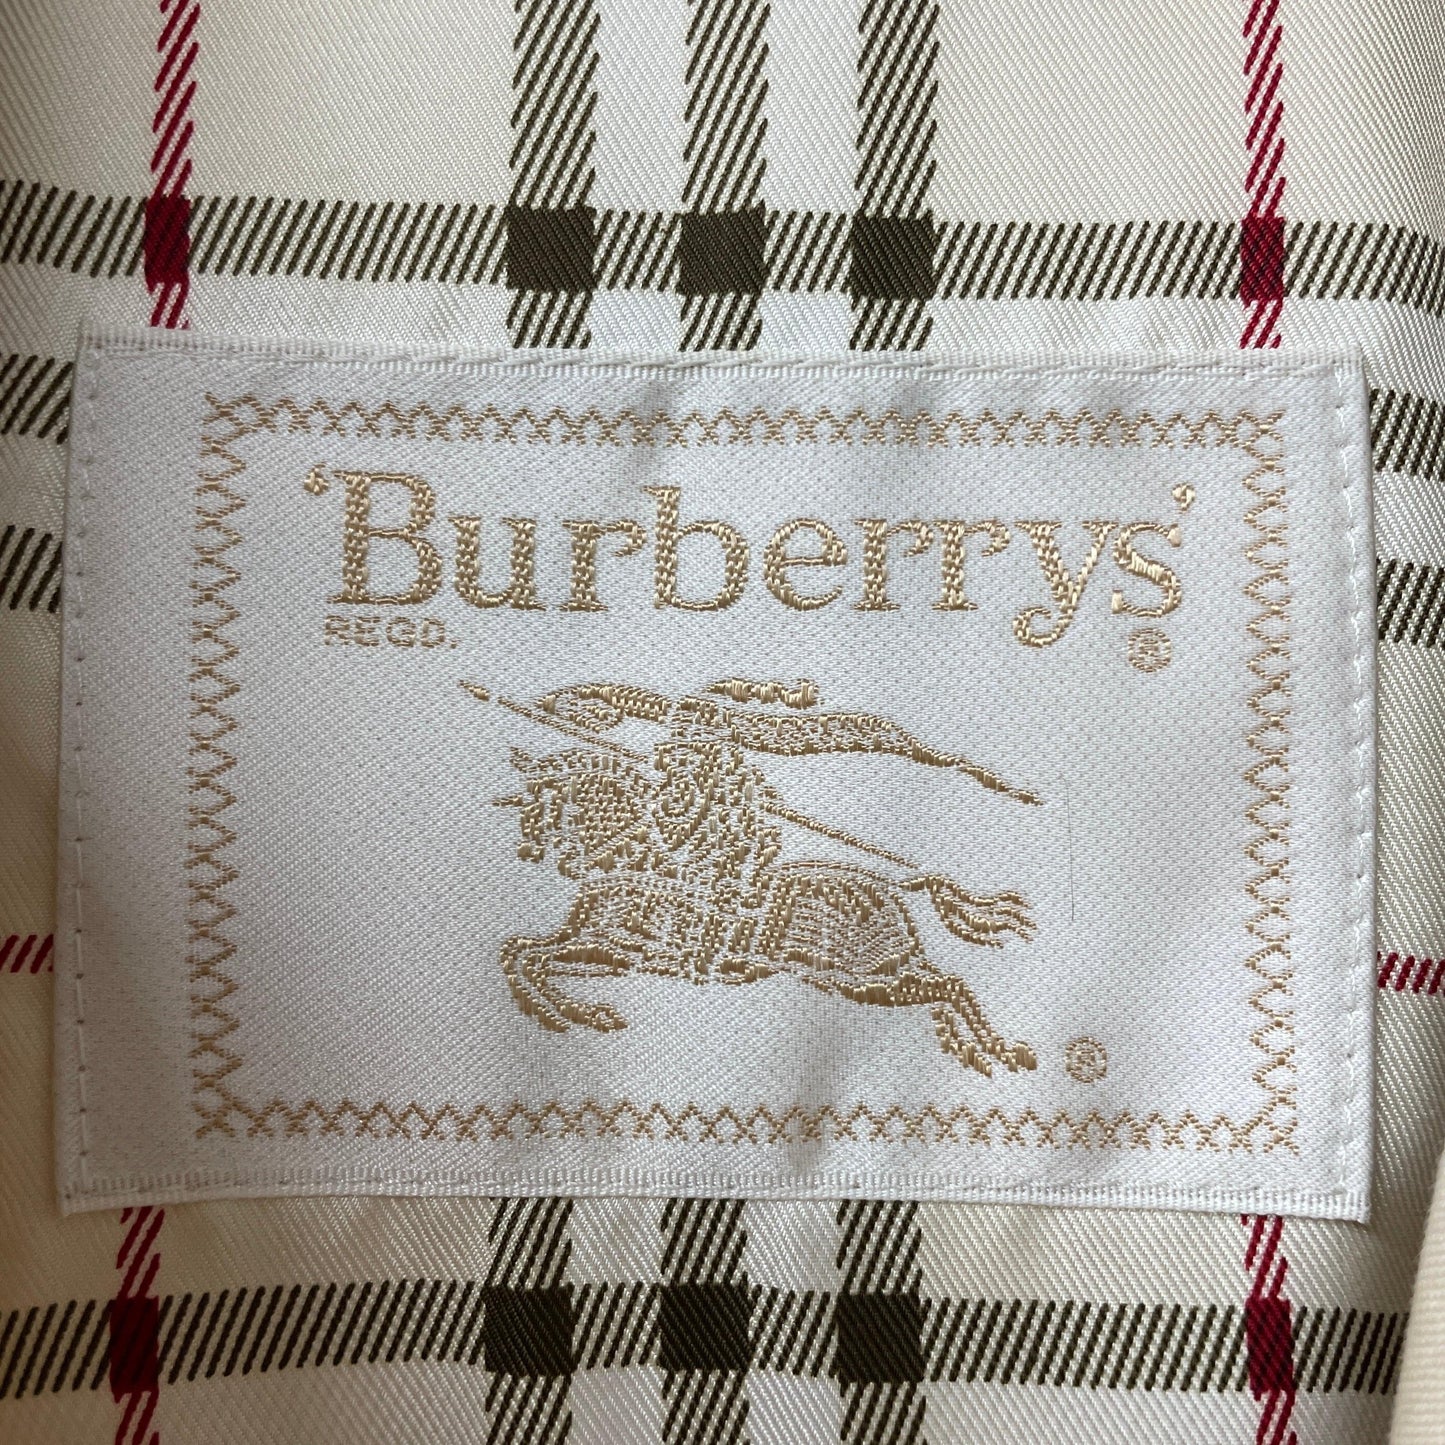 burberrys coat coat burberry